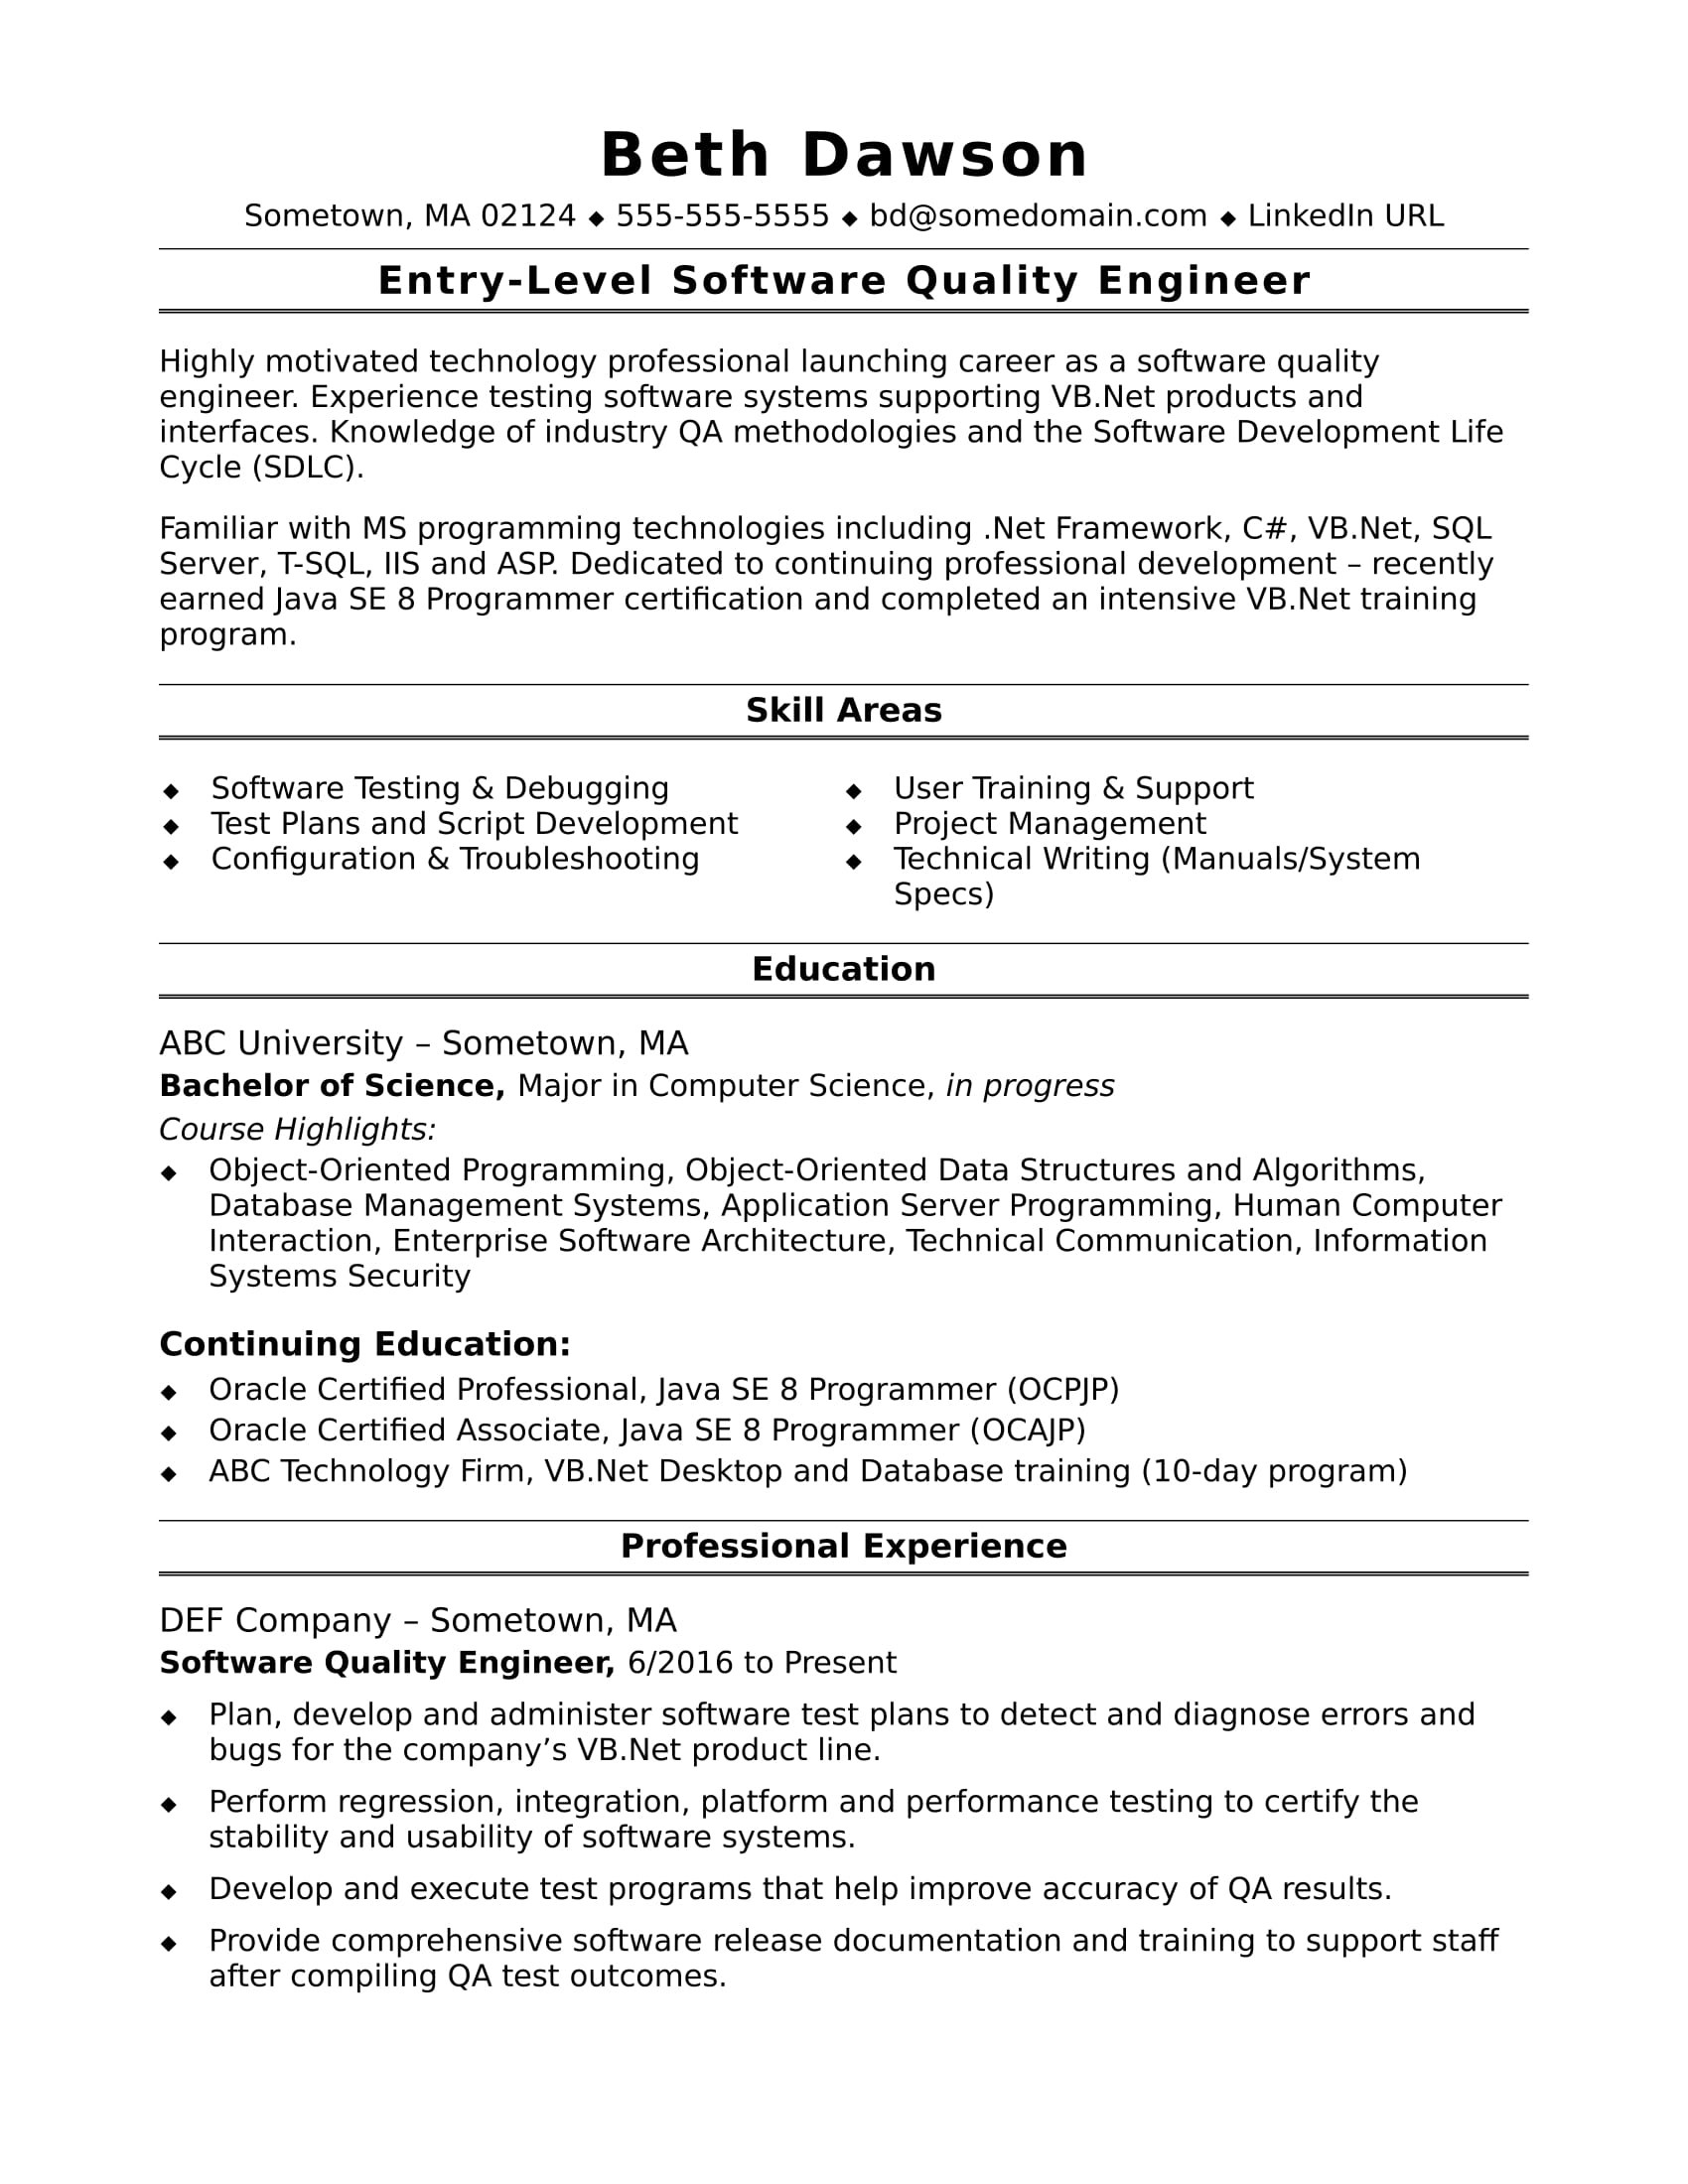 Software Engineer Resume Sample Monster Entry Level Entry-level Qa Engineer Resume Monster.com